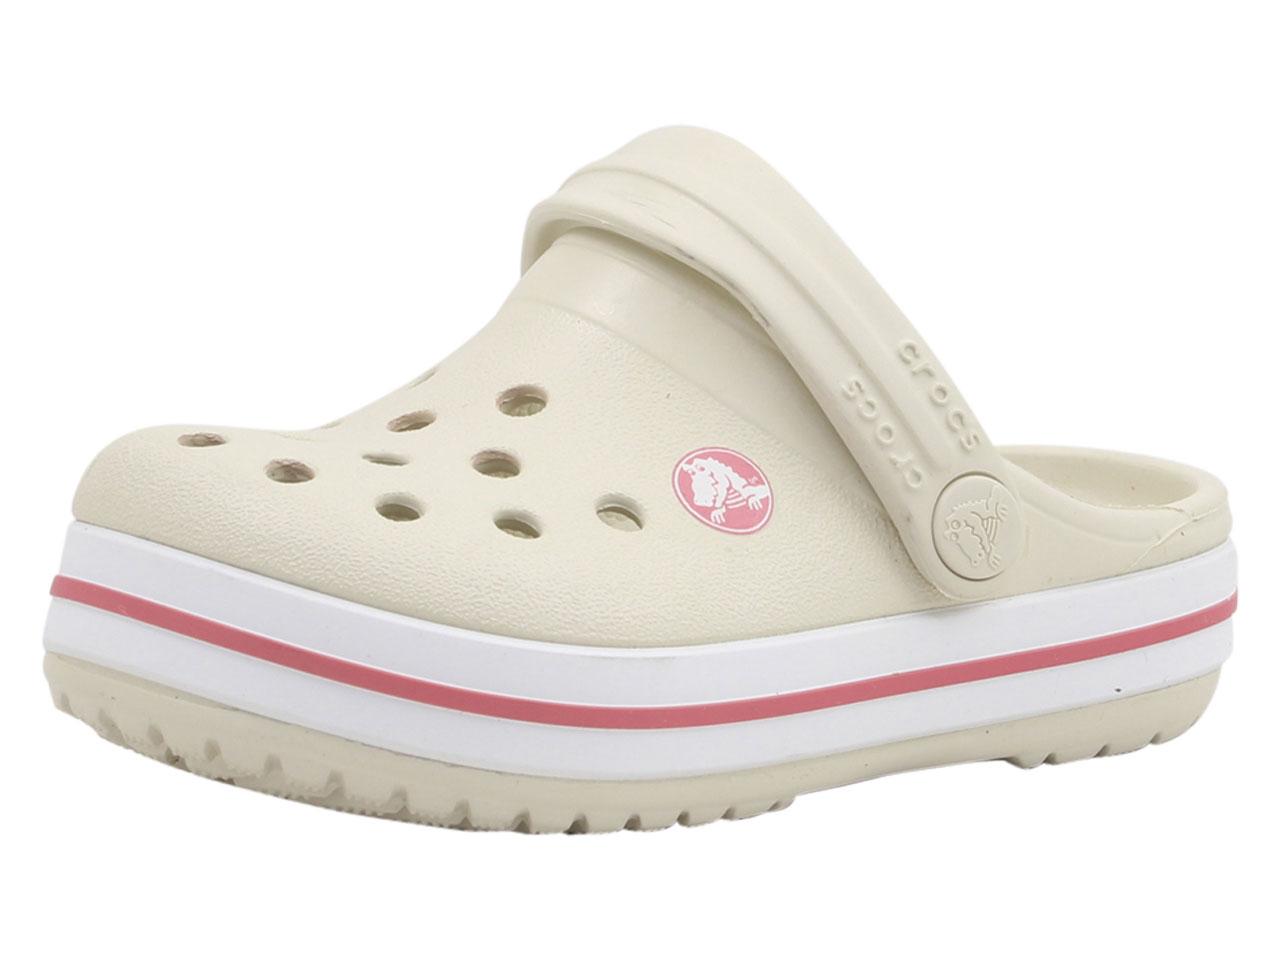 Crocs Toddler/Little Kid's Crocband Clogs Sandals Shoes - Stucco/Melon - 8 M US Toddler